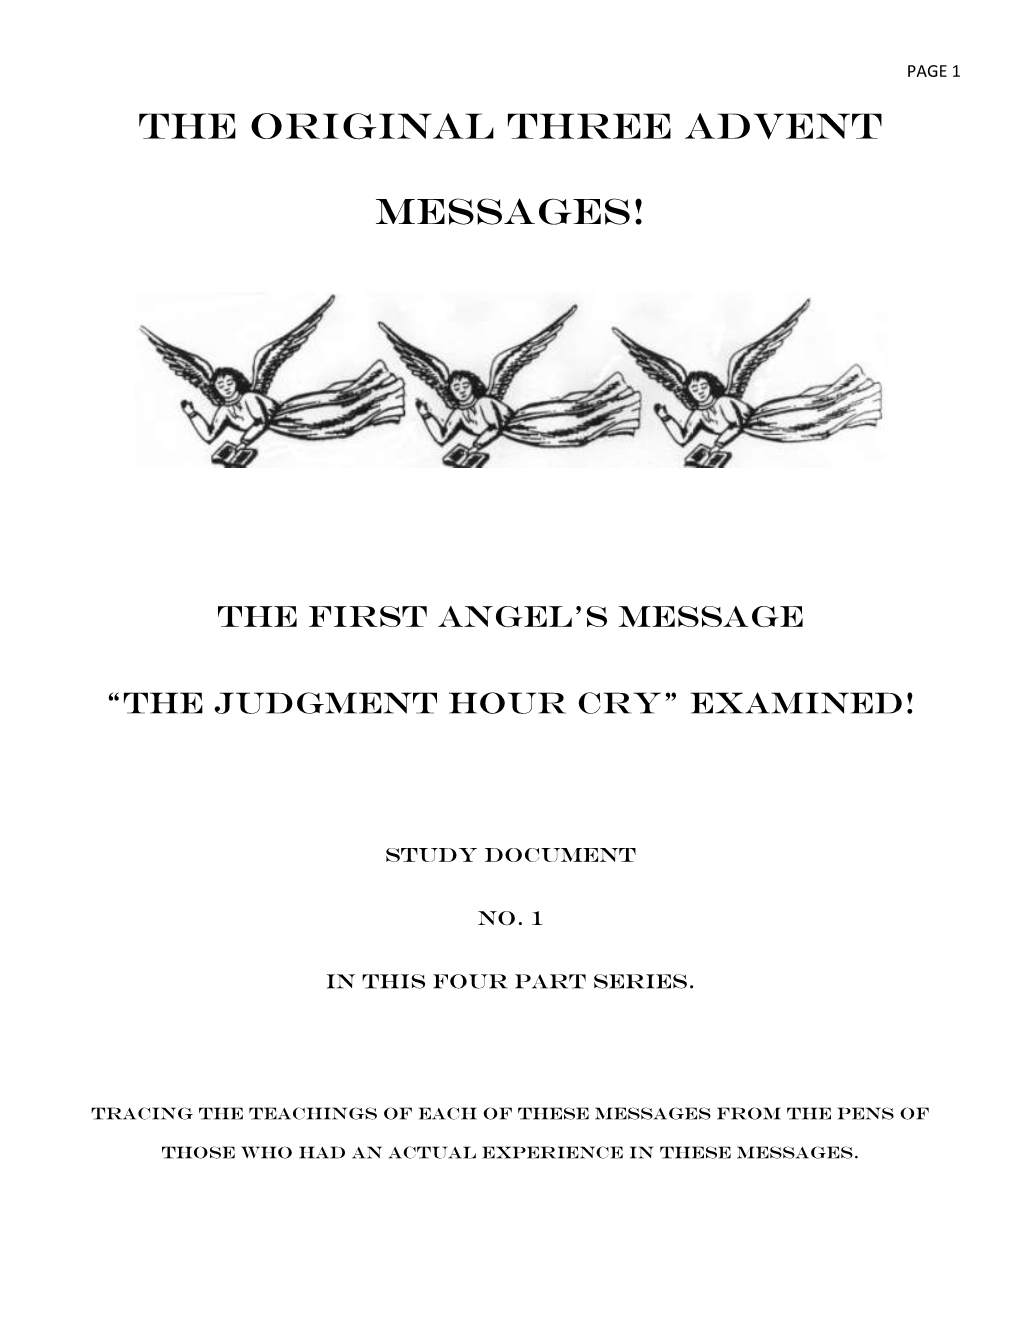 The Original Three Advent Messages!